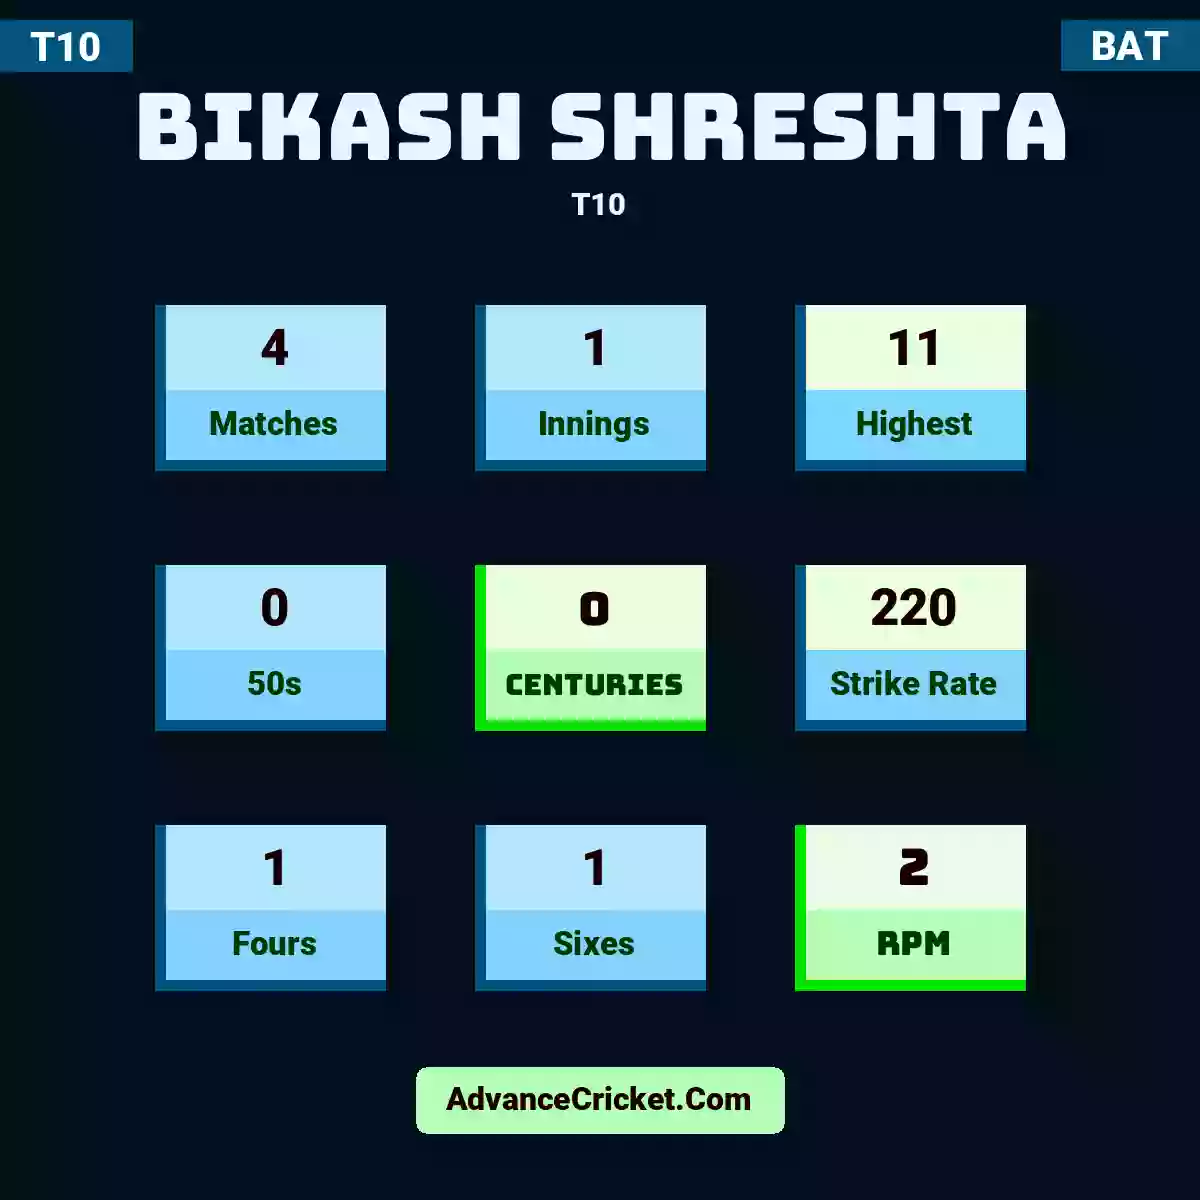 Bikash Shreshta T10 , Bikash Shreshta played 4 matches, scored 11 runs as highest, 0 half-centuries, and 0 centuries, with a strike rate of 220. B.Shreshta hit 1 fours and 1 sixes, with an RPM of 2.